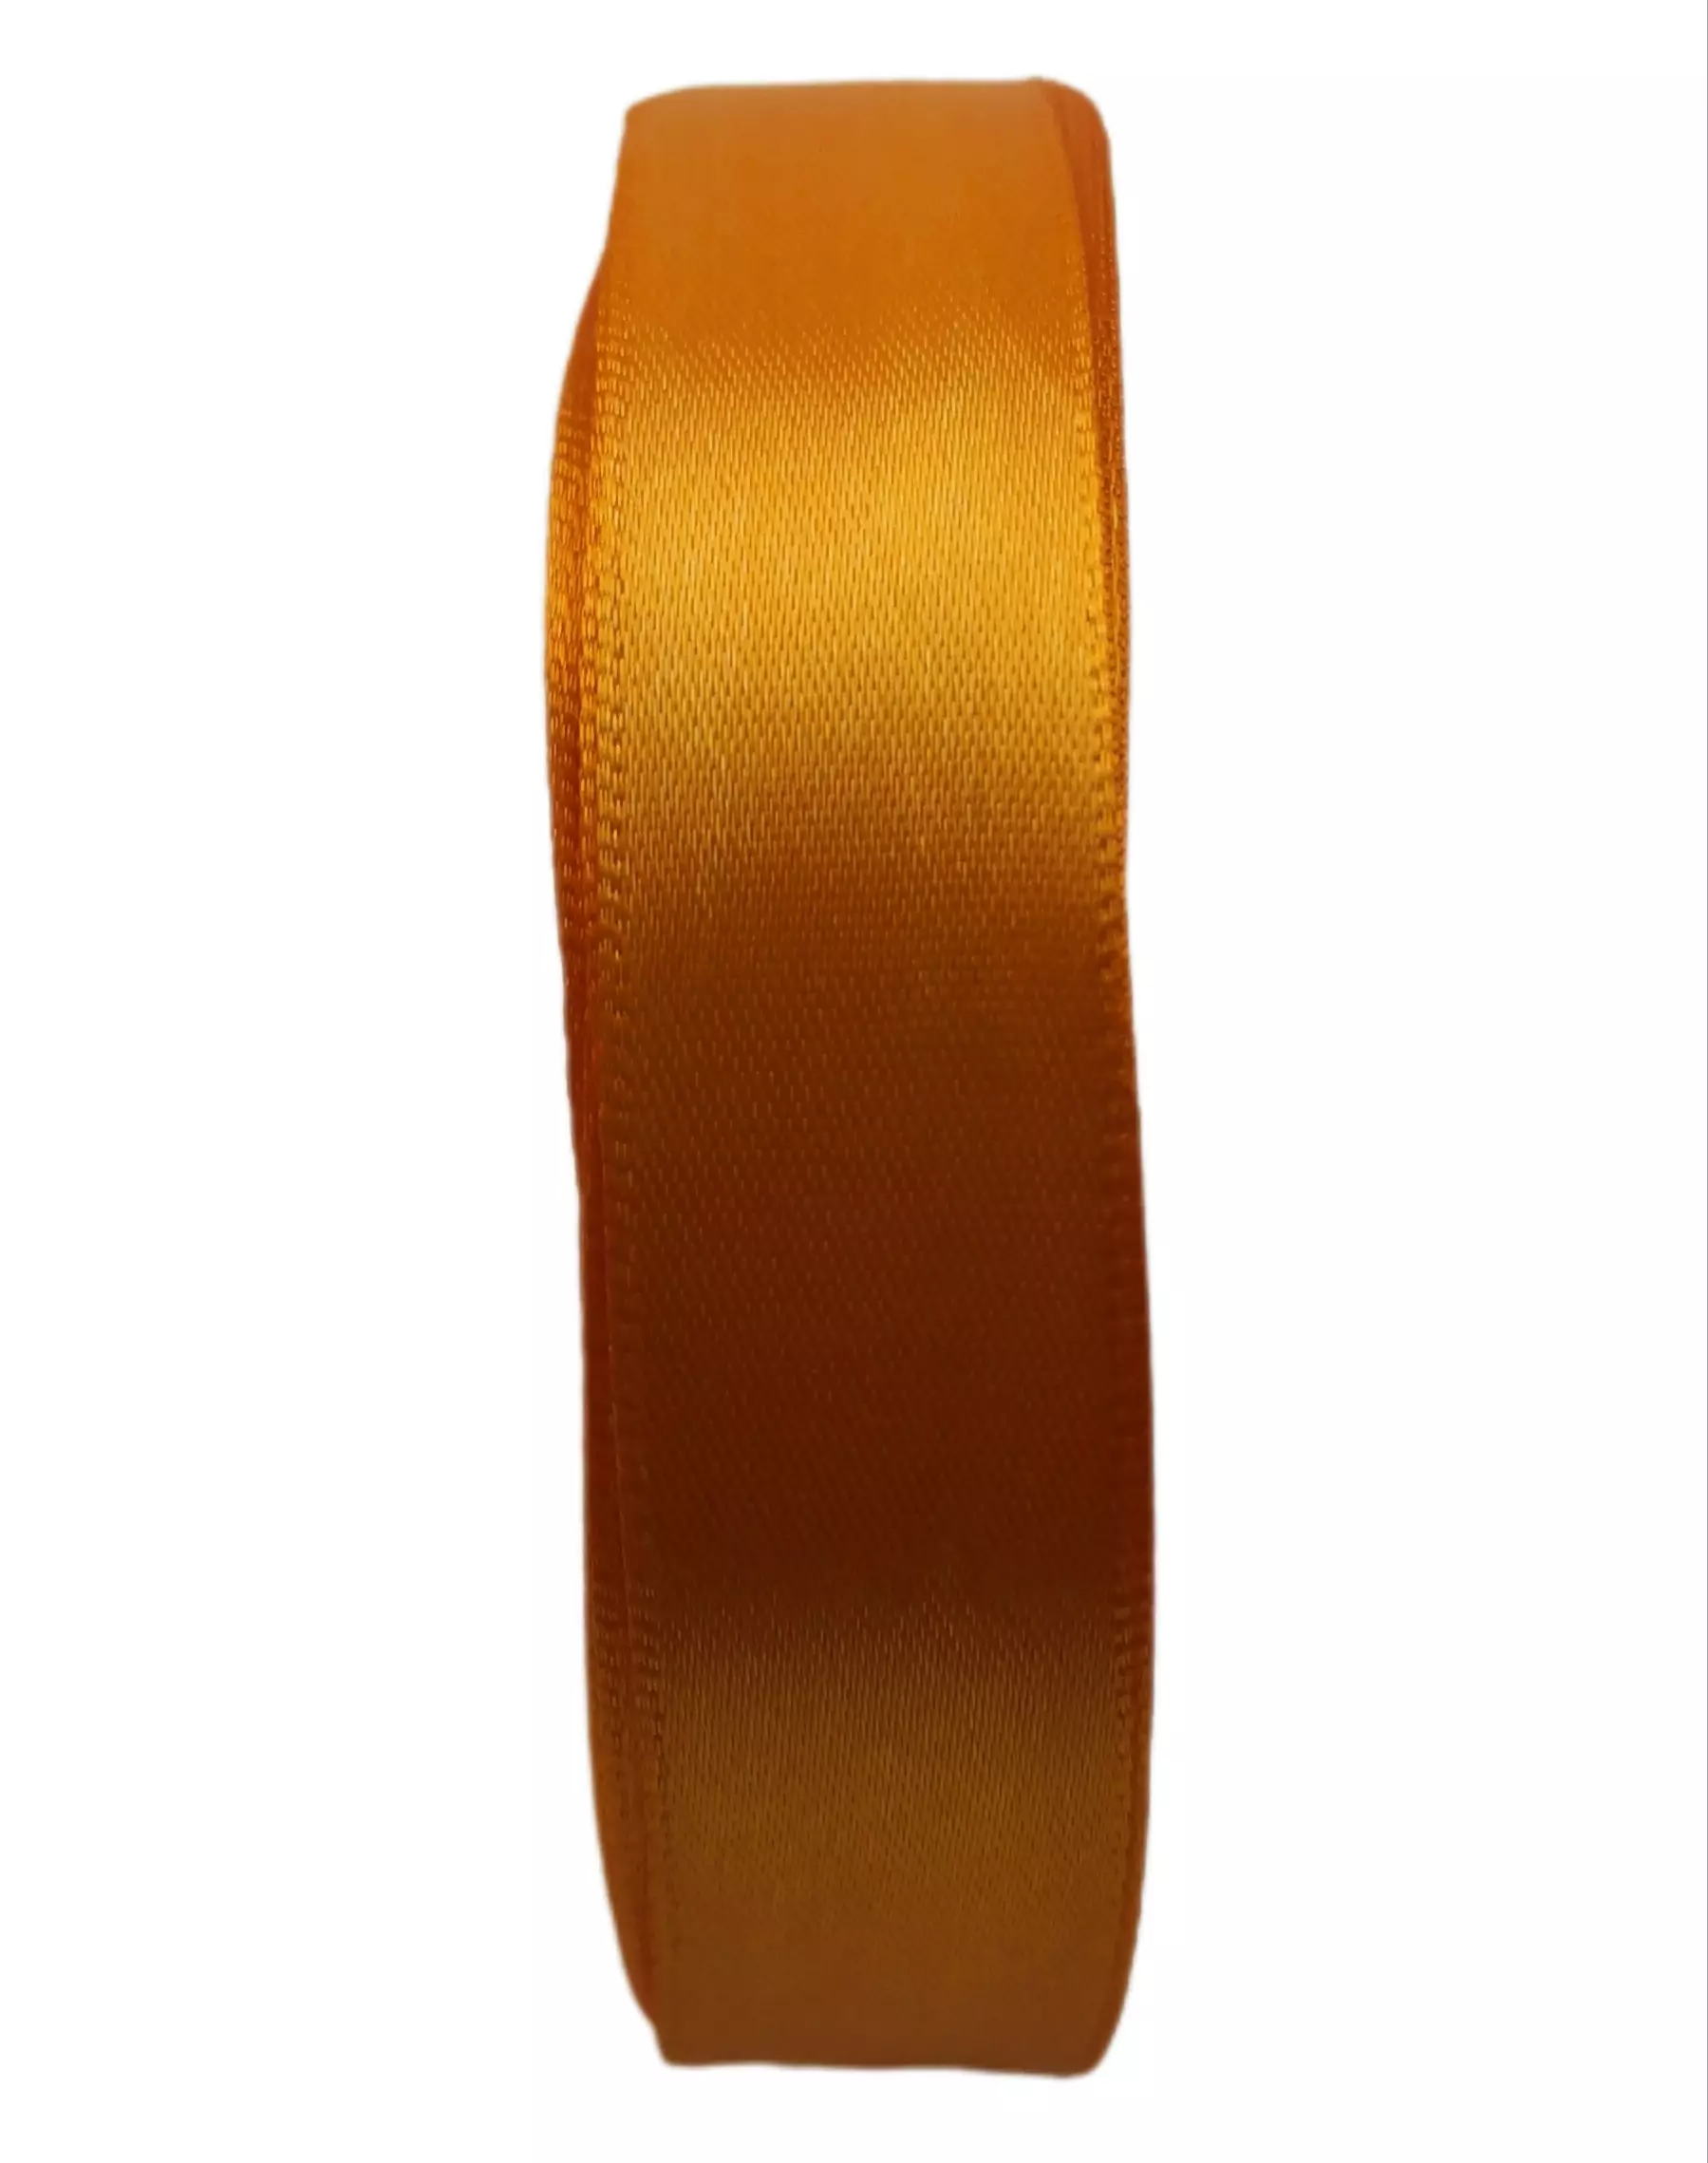 151 szalag 2cm Gyanta sárga 